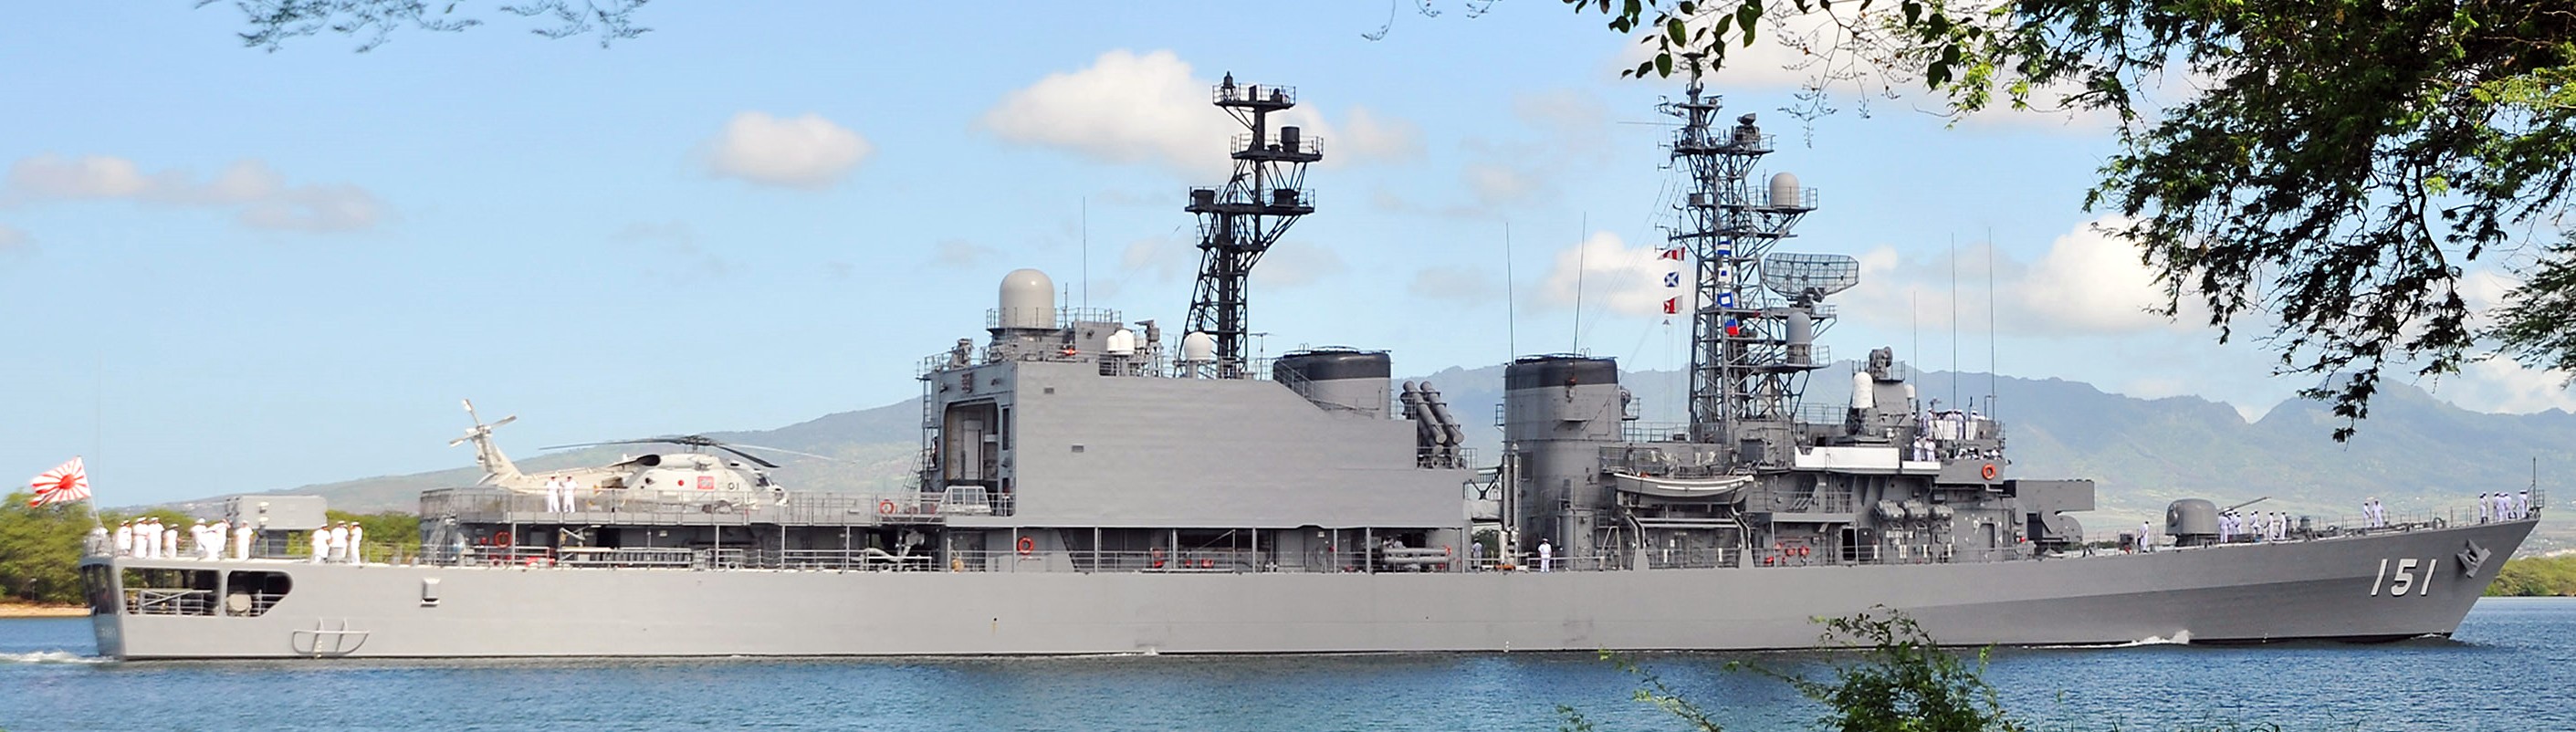 dd-151 js asagiri class destroyer japan maritime self defense force jmsdf rimpac hawaii 05